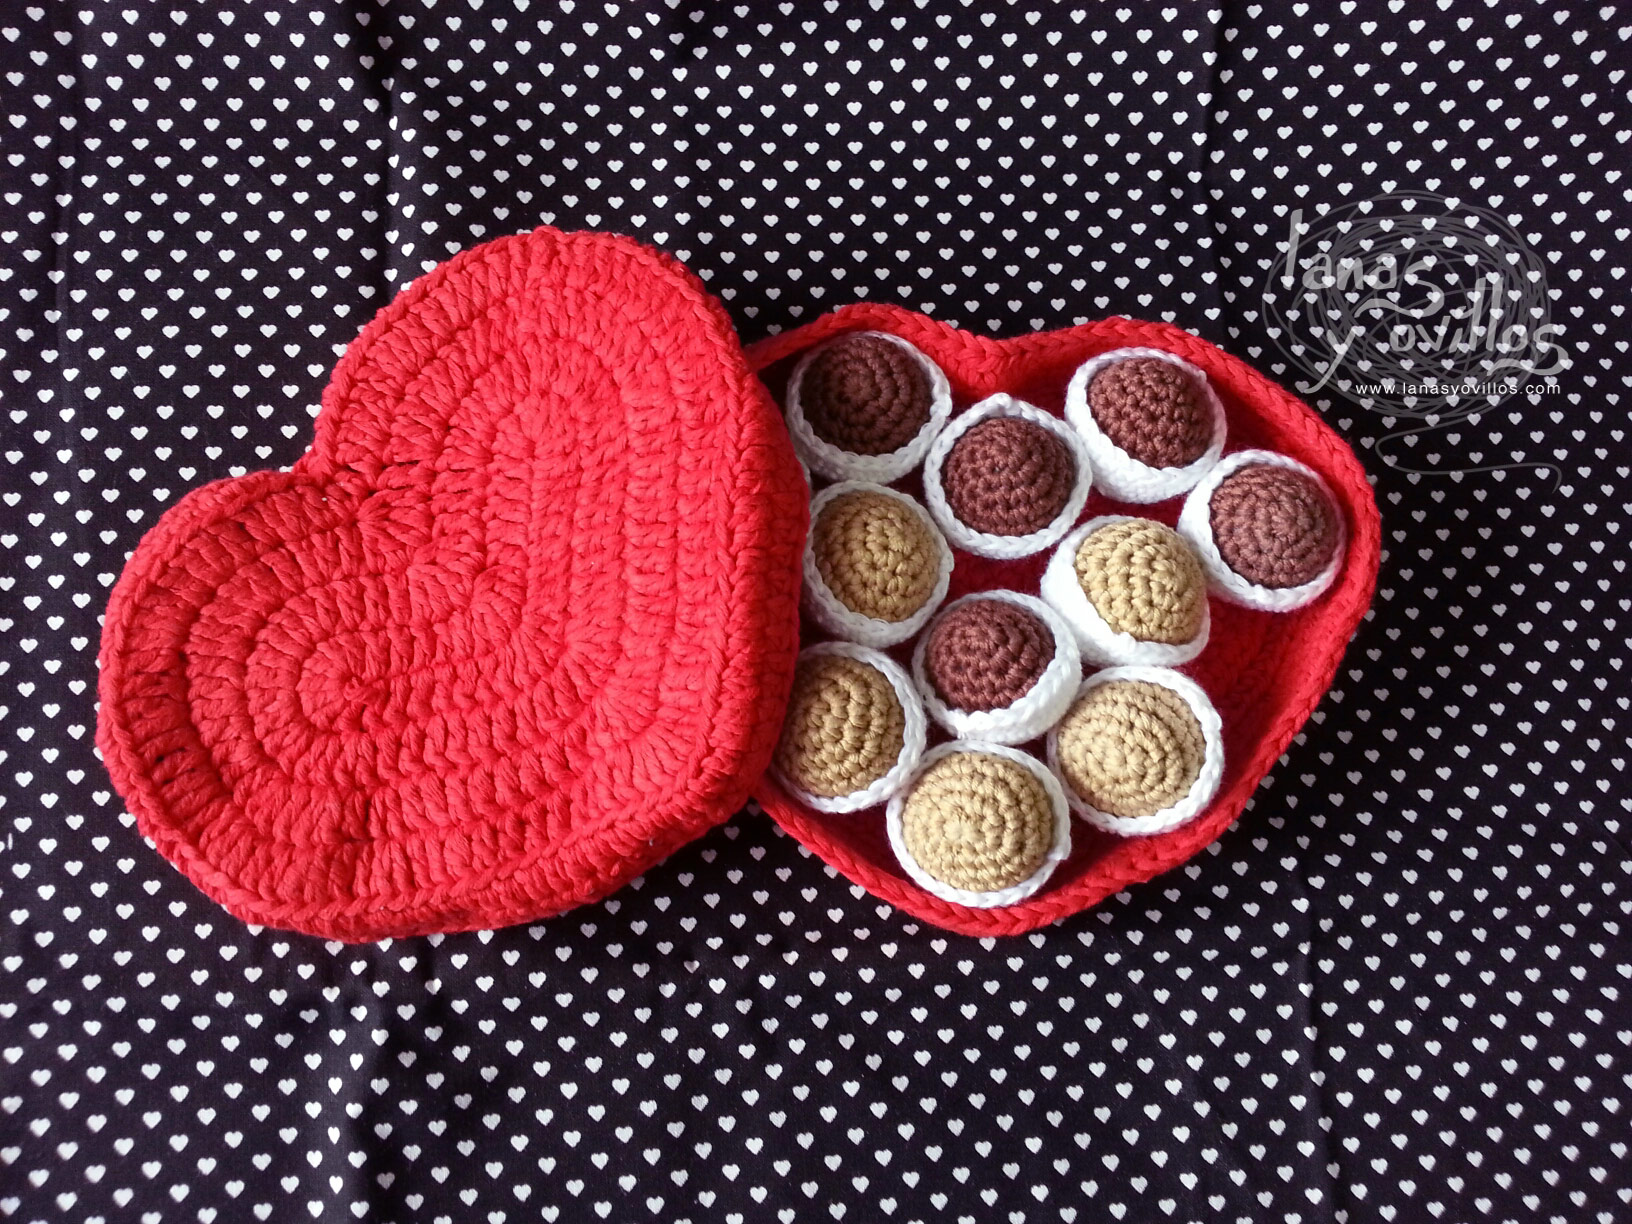 bombon box chocolate valentines day gift idea crochet free pattern